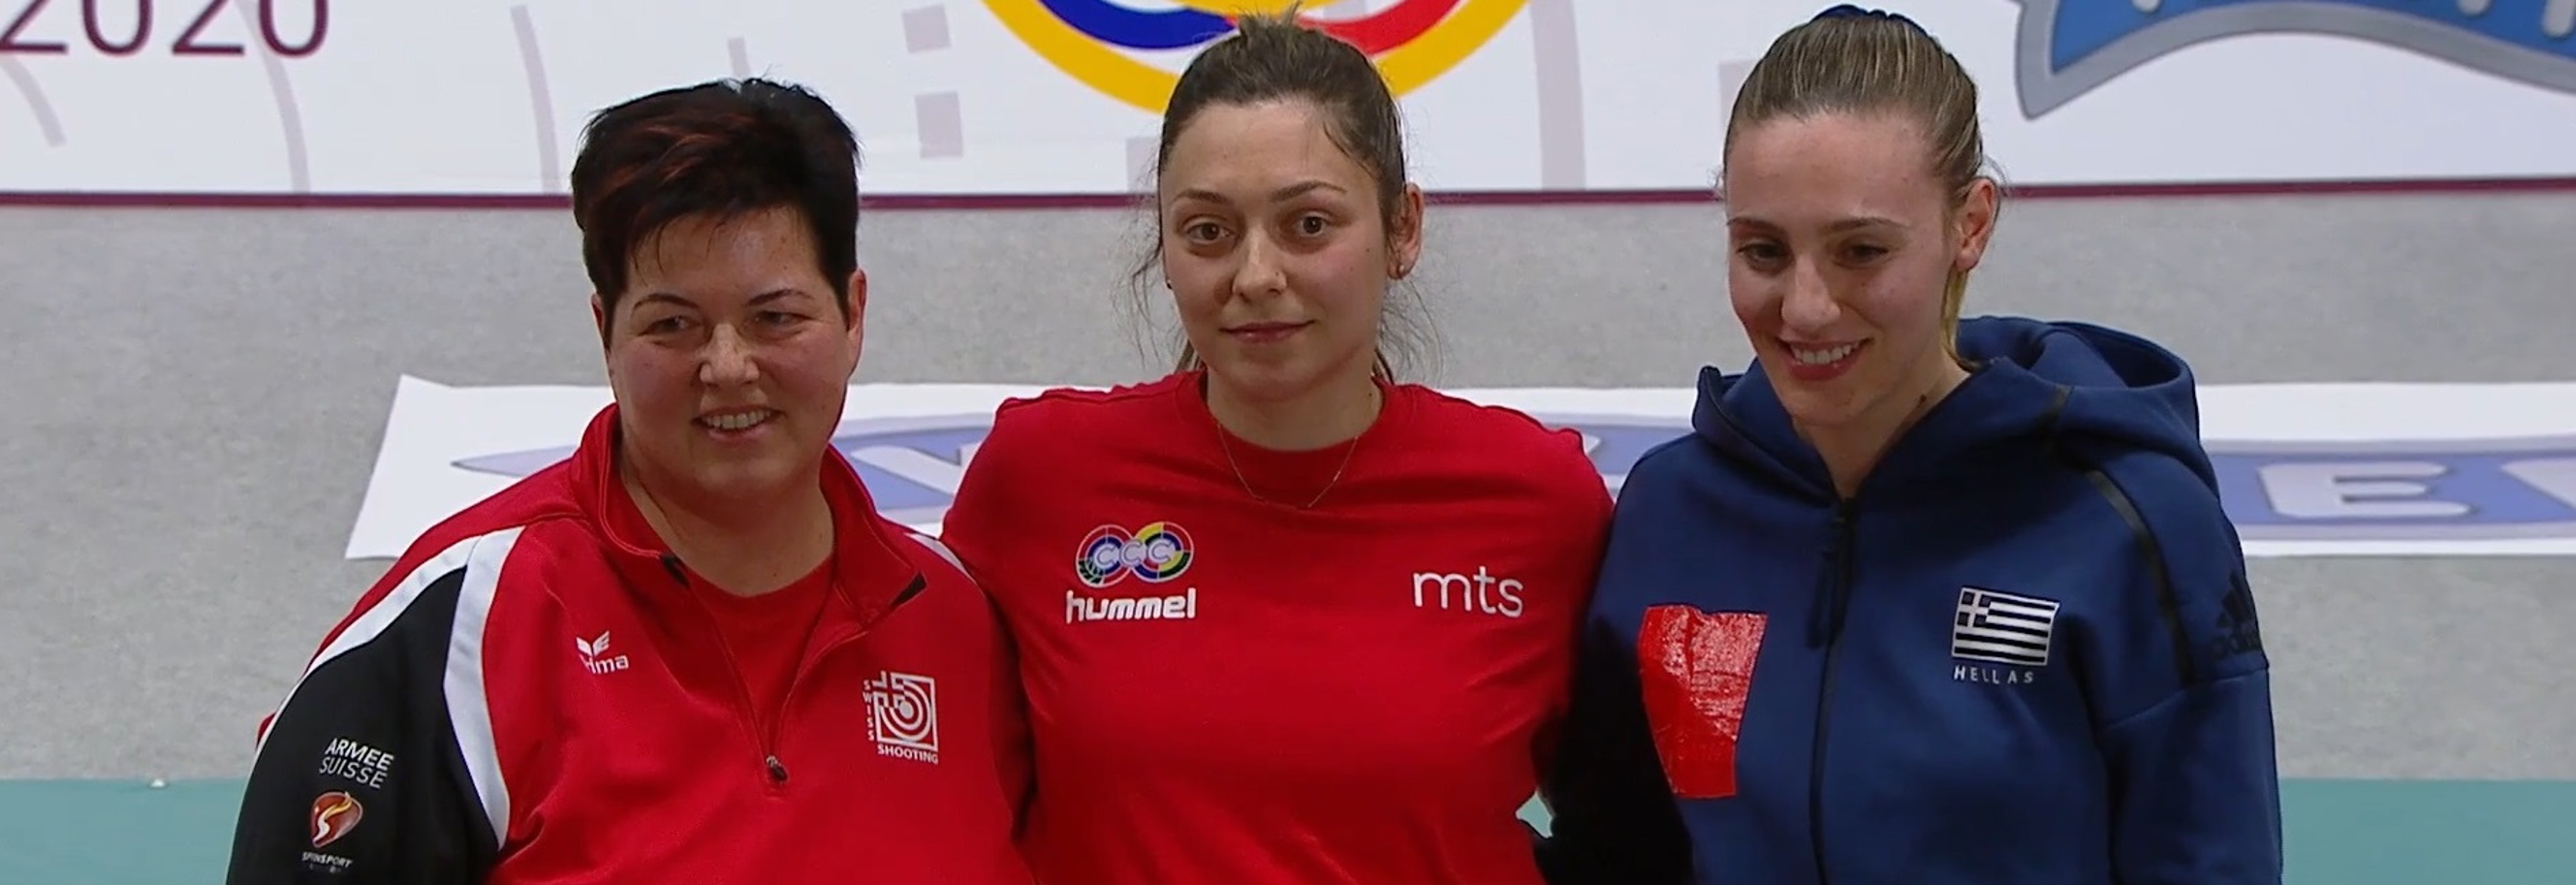 Heidi Diethelm Gerber (links) gewann hinter Bobana Momcilovic Velickovic (Mitte) und vor Anna Korakaki EM-Silber.
(Screenshot Live Broadcast)